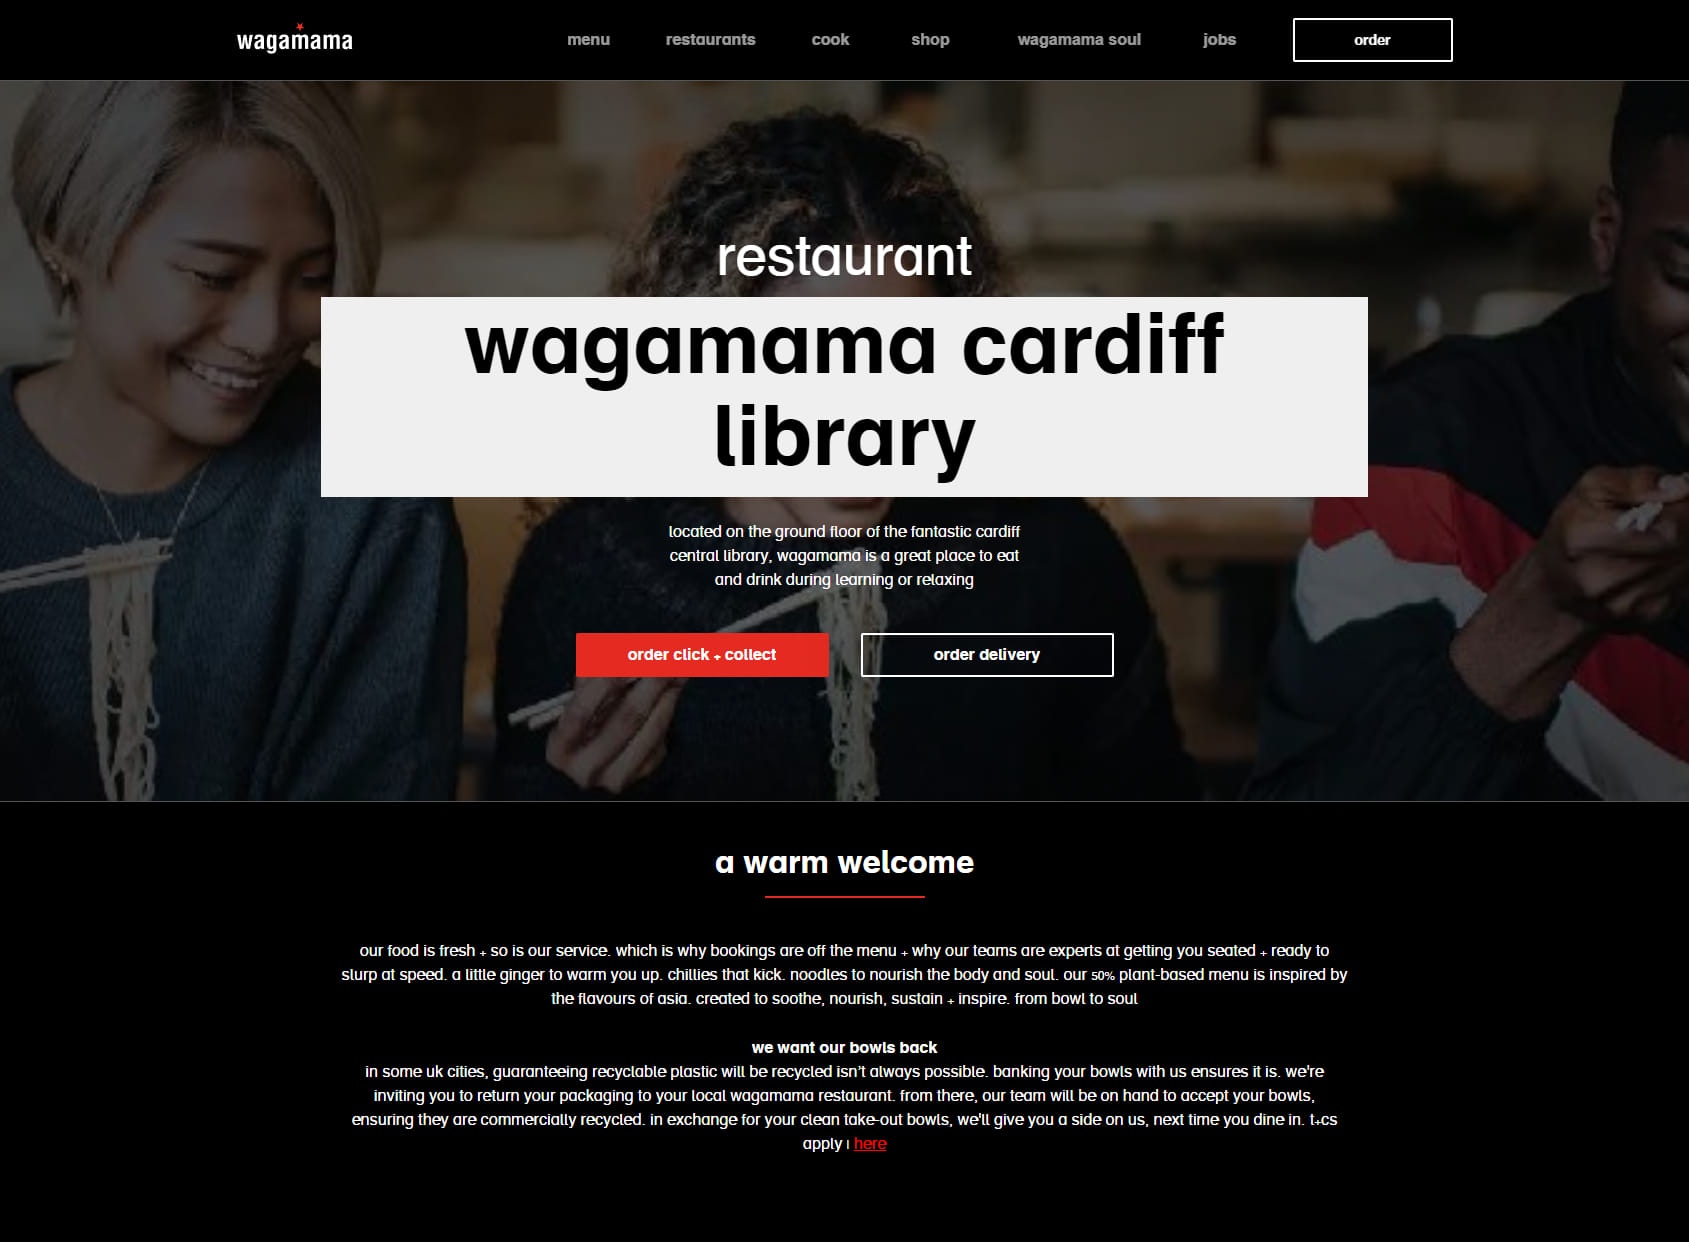 wagamama cardiff library